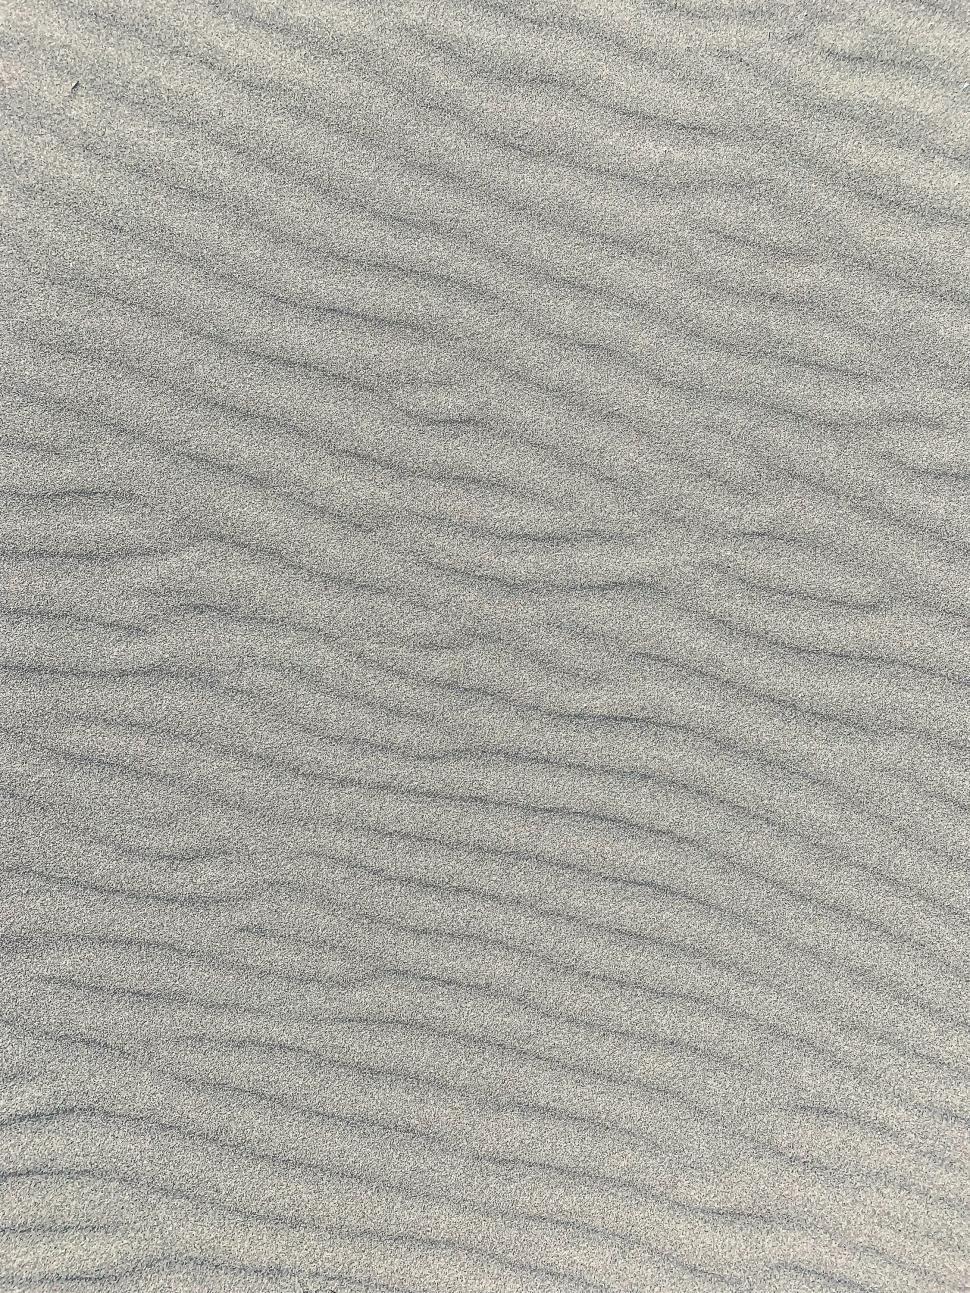 Free Image of Beach sand ripples 